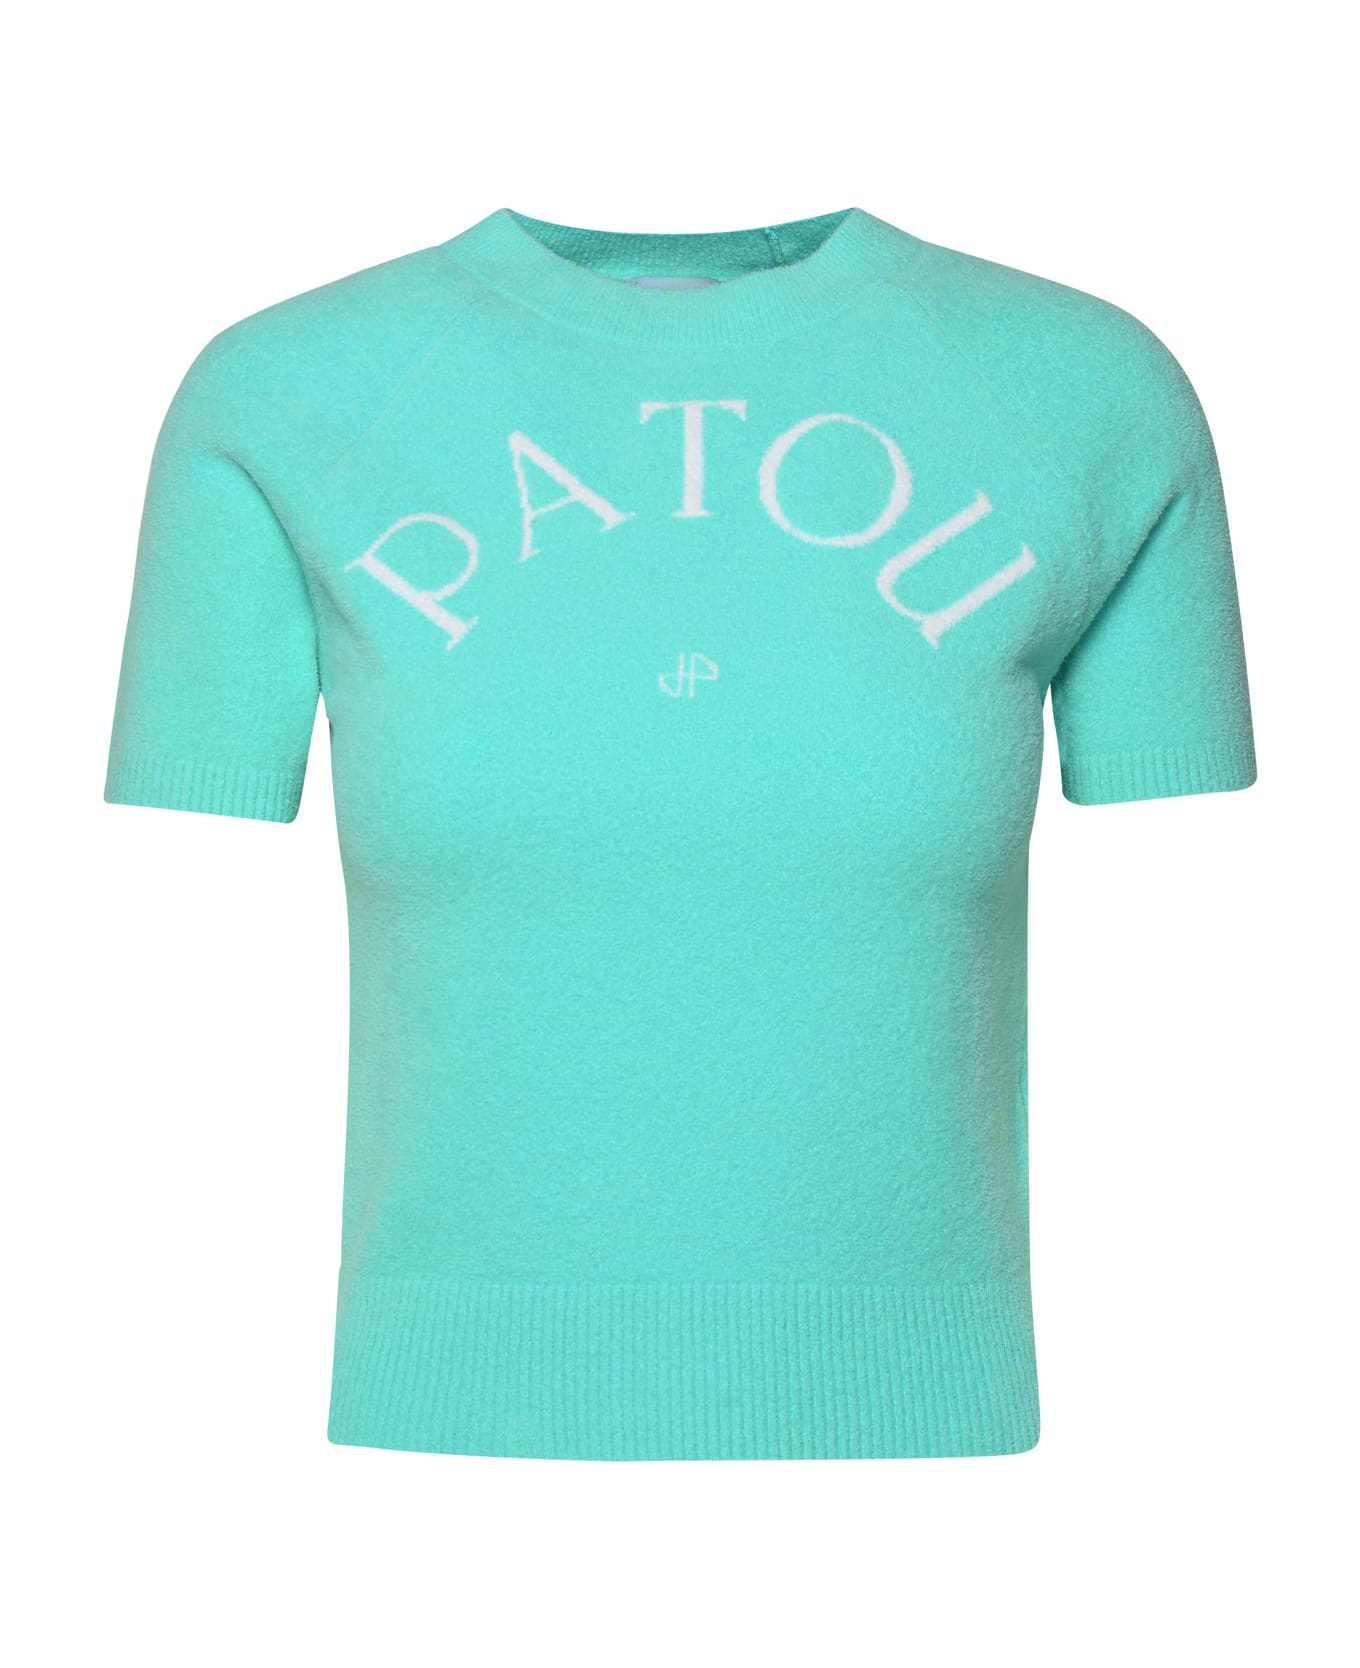 Patou Teal Cotton Blend Sweater - Light Blue